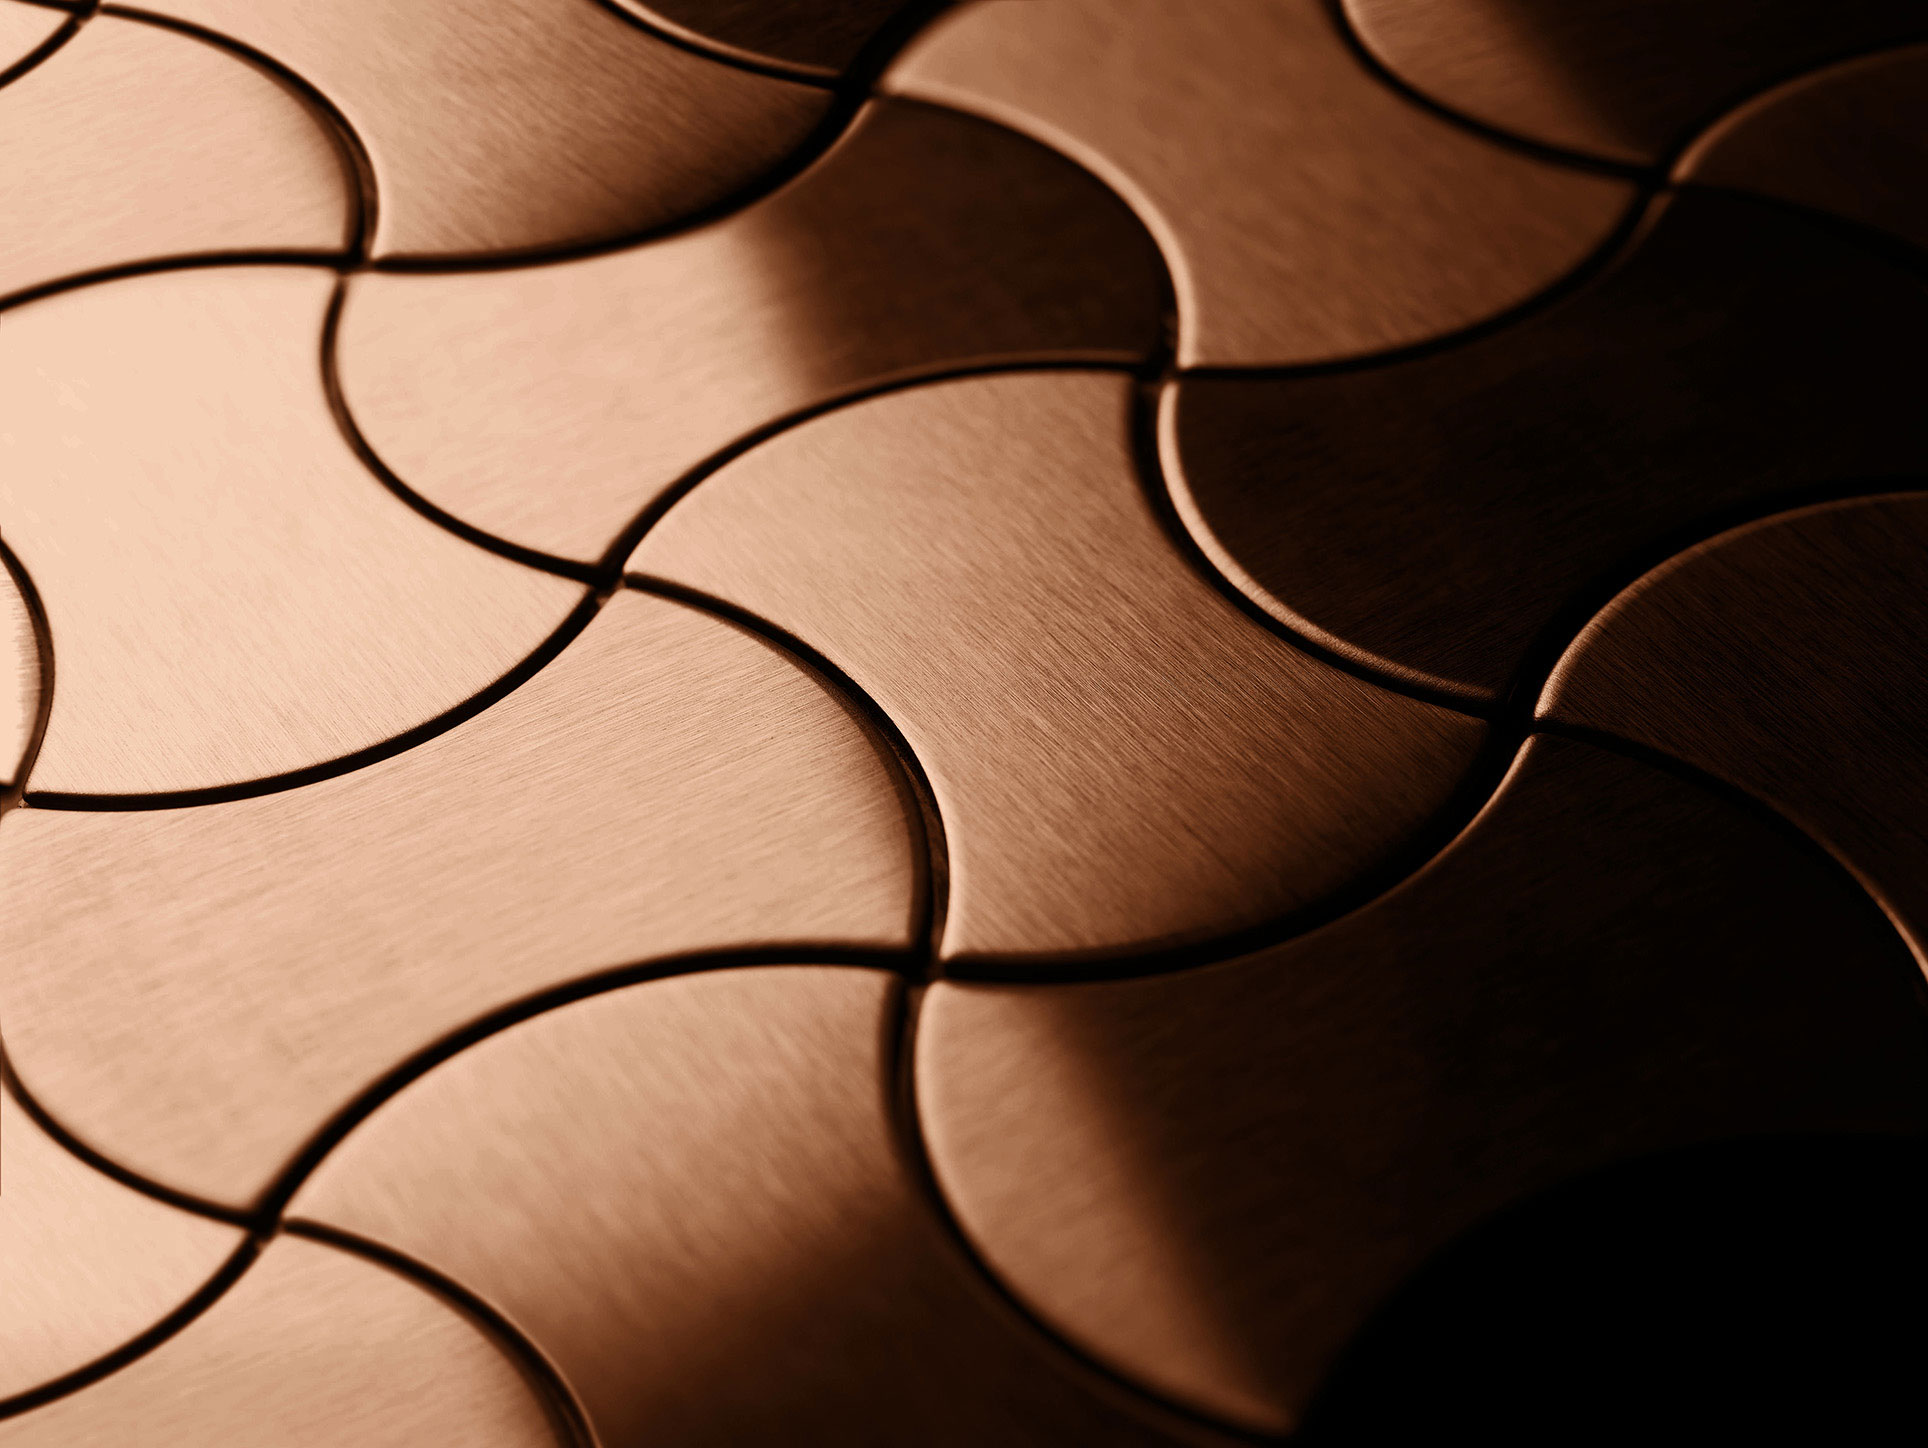 INFINIT Copper Tiles